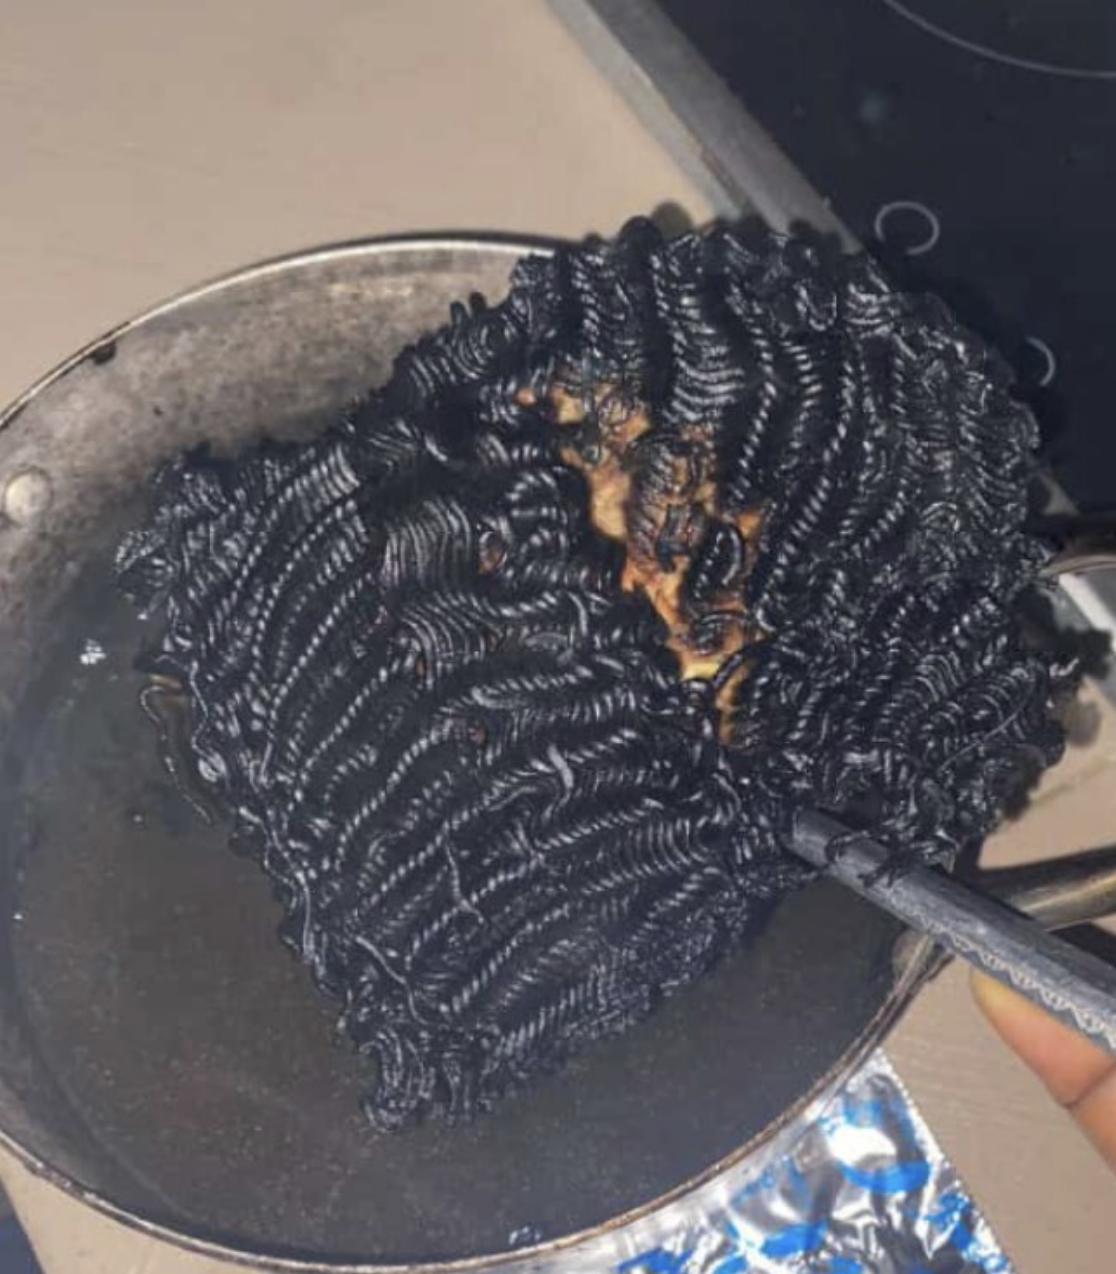 Burnt noodles in a pot